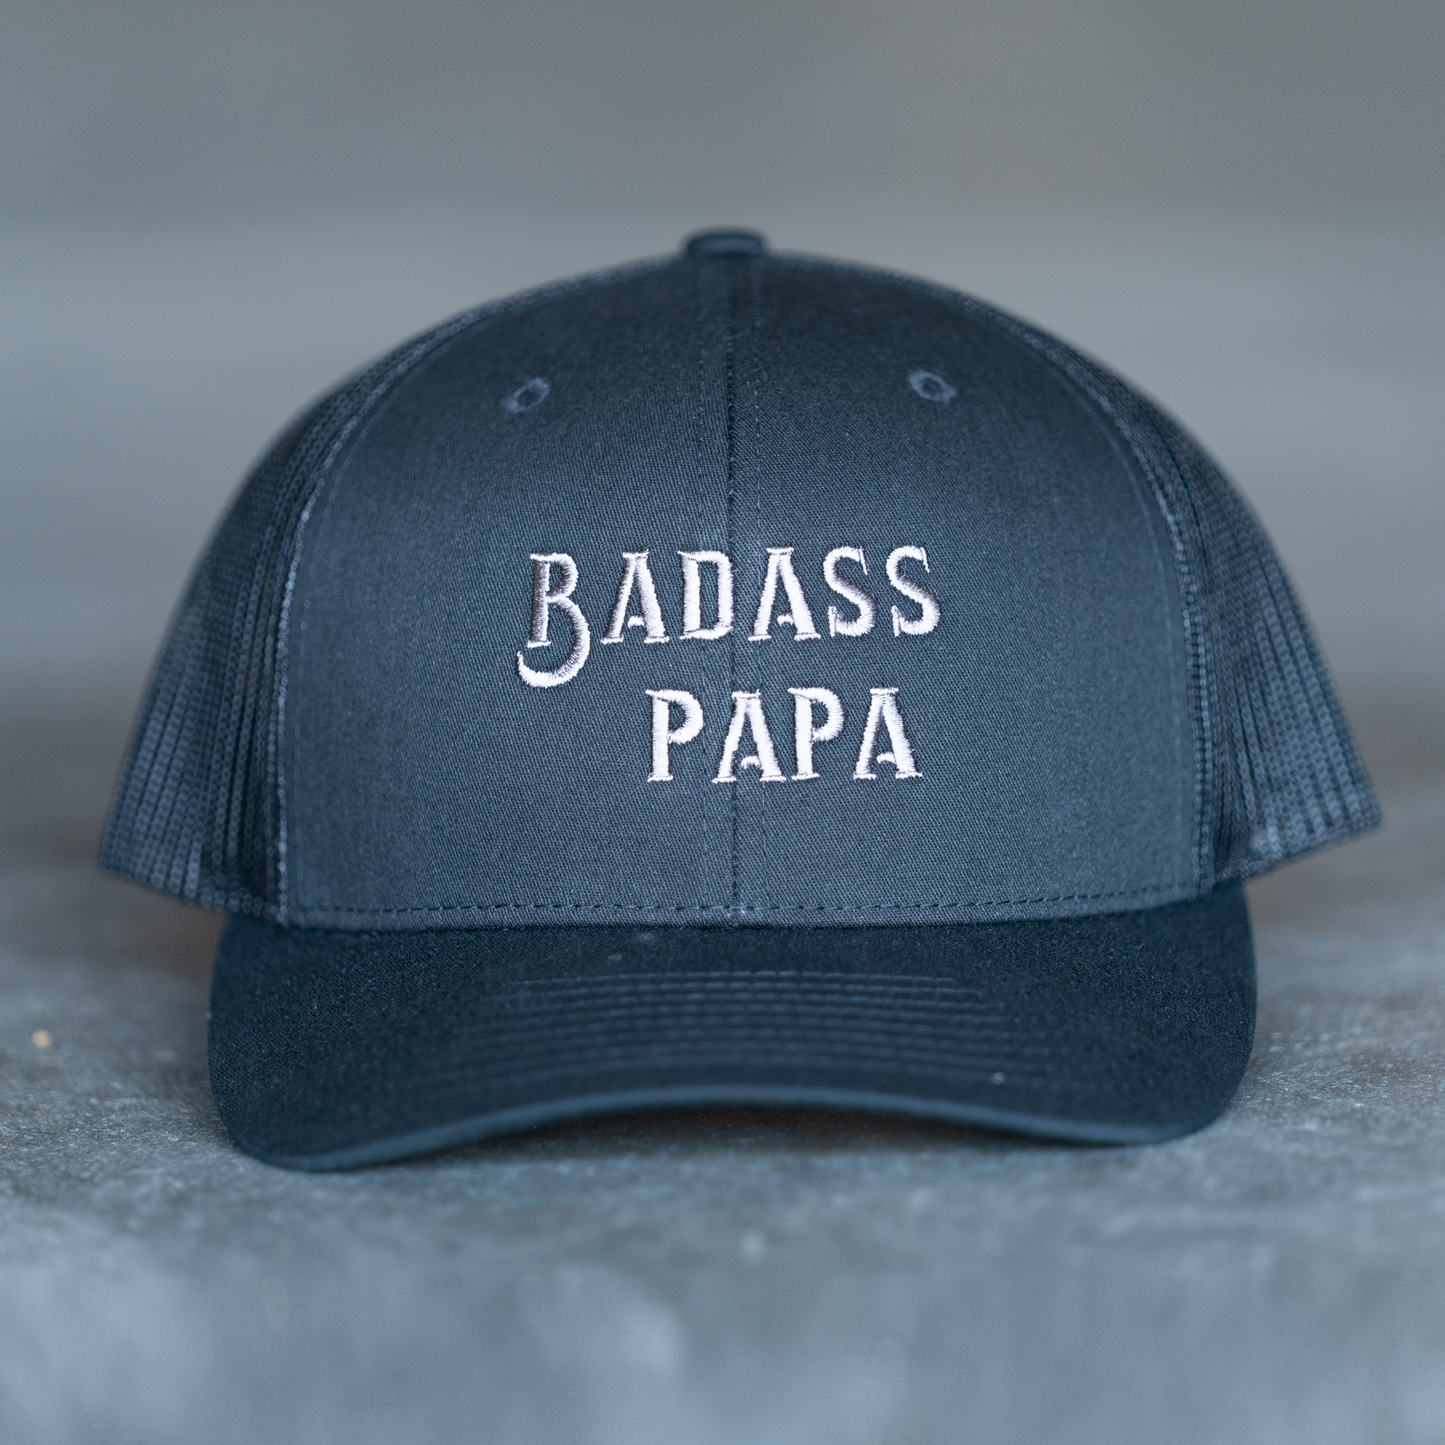 Badass Papa (Gray) - Trucker Hat (Black)